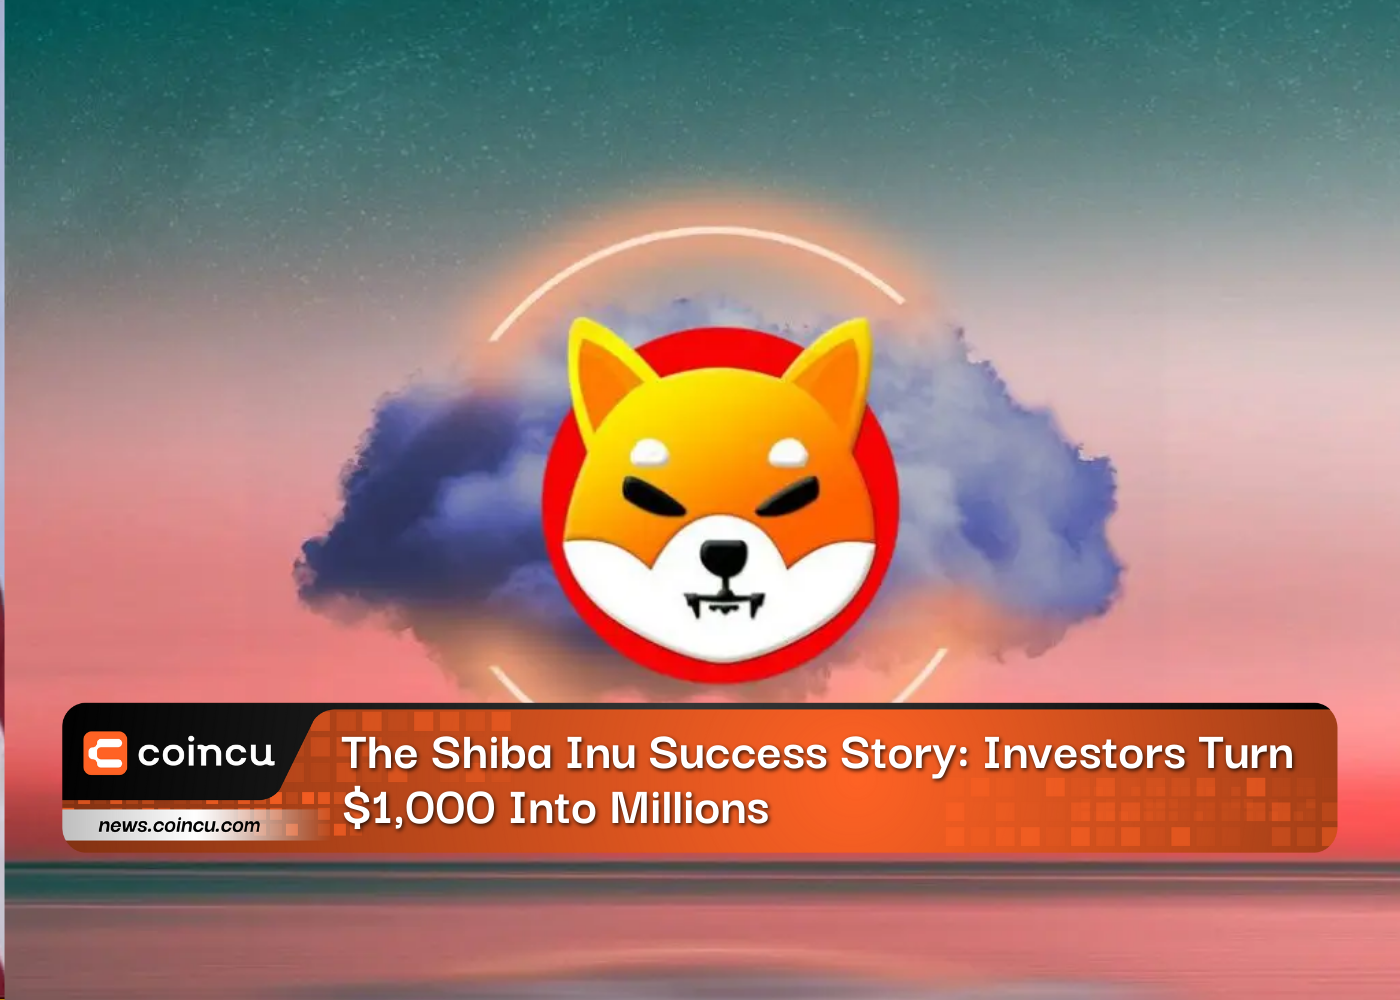 The Shiba Inu Success Story: Investors Turn $1,000 Into Millions